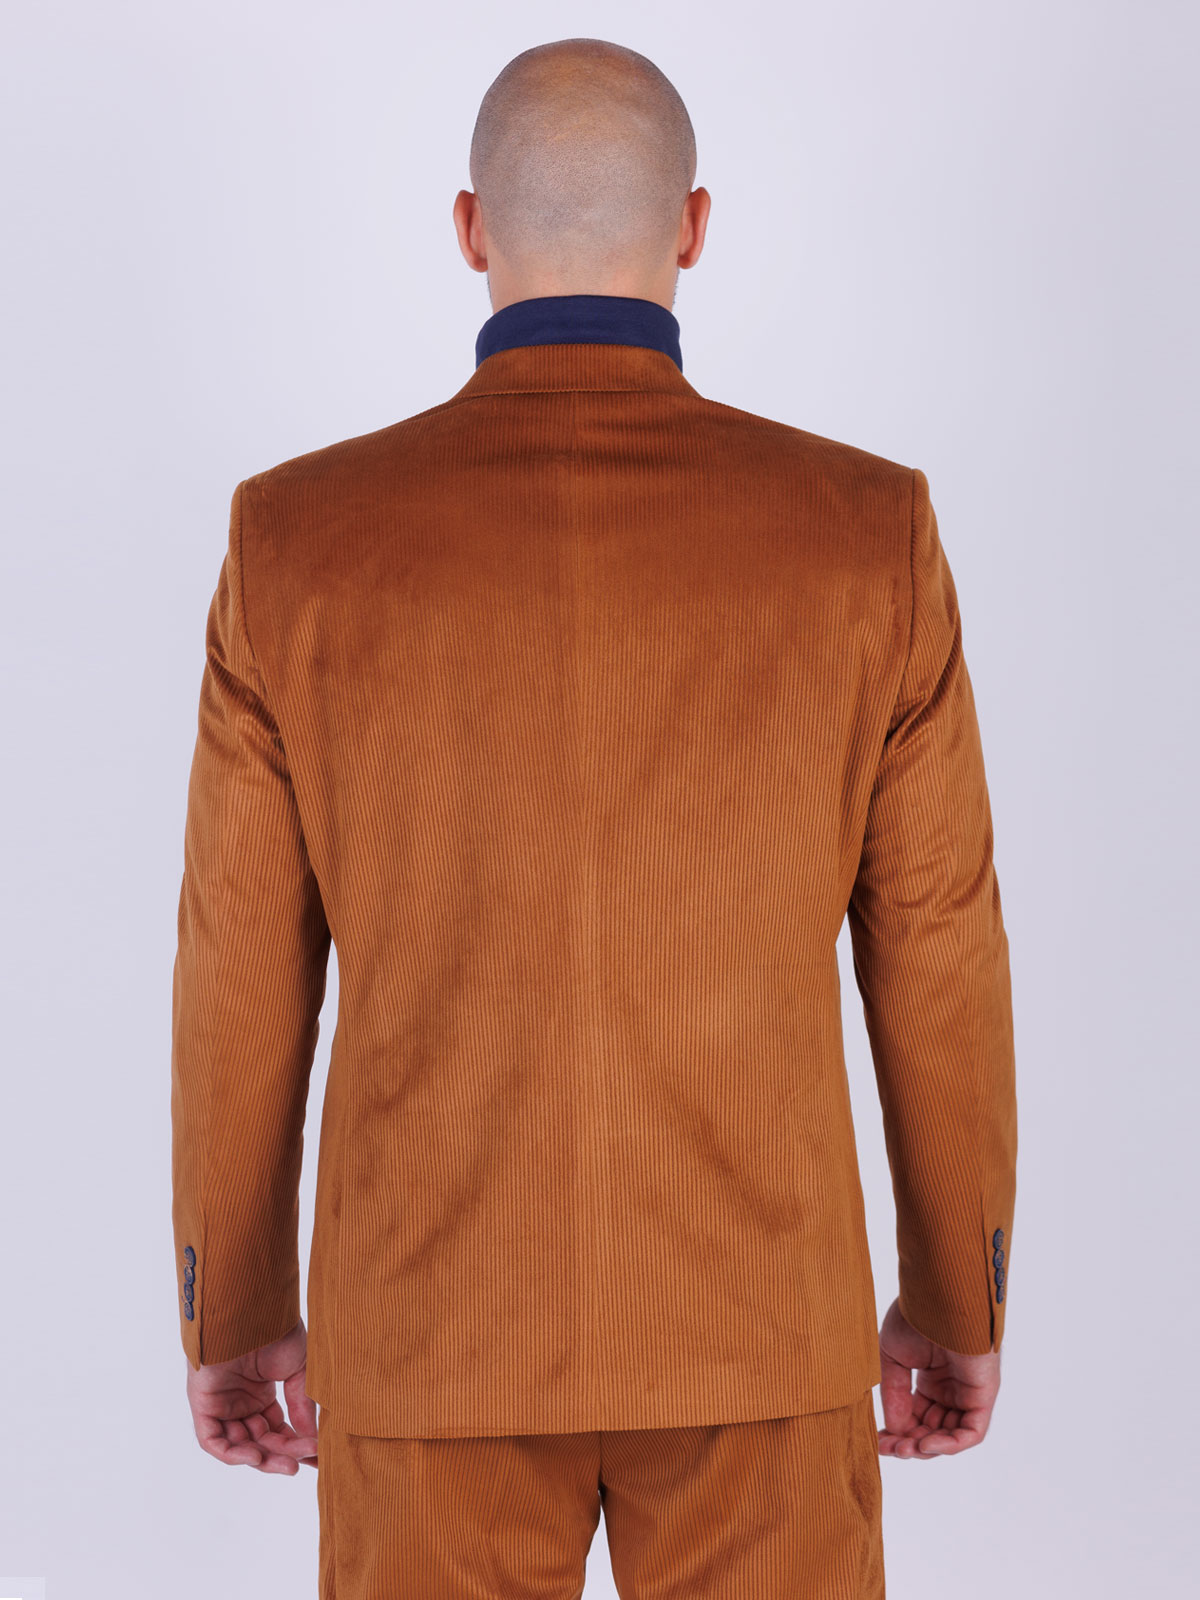 Elegant jacket in mustard color - 61100 € 83.80 img2